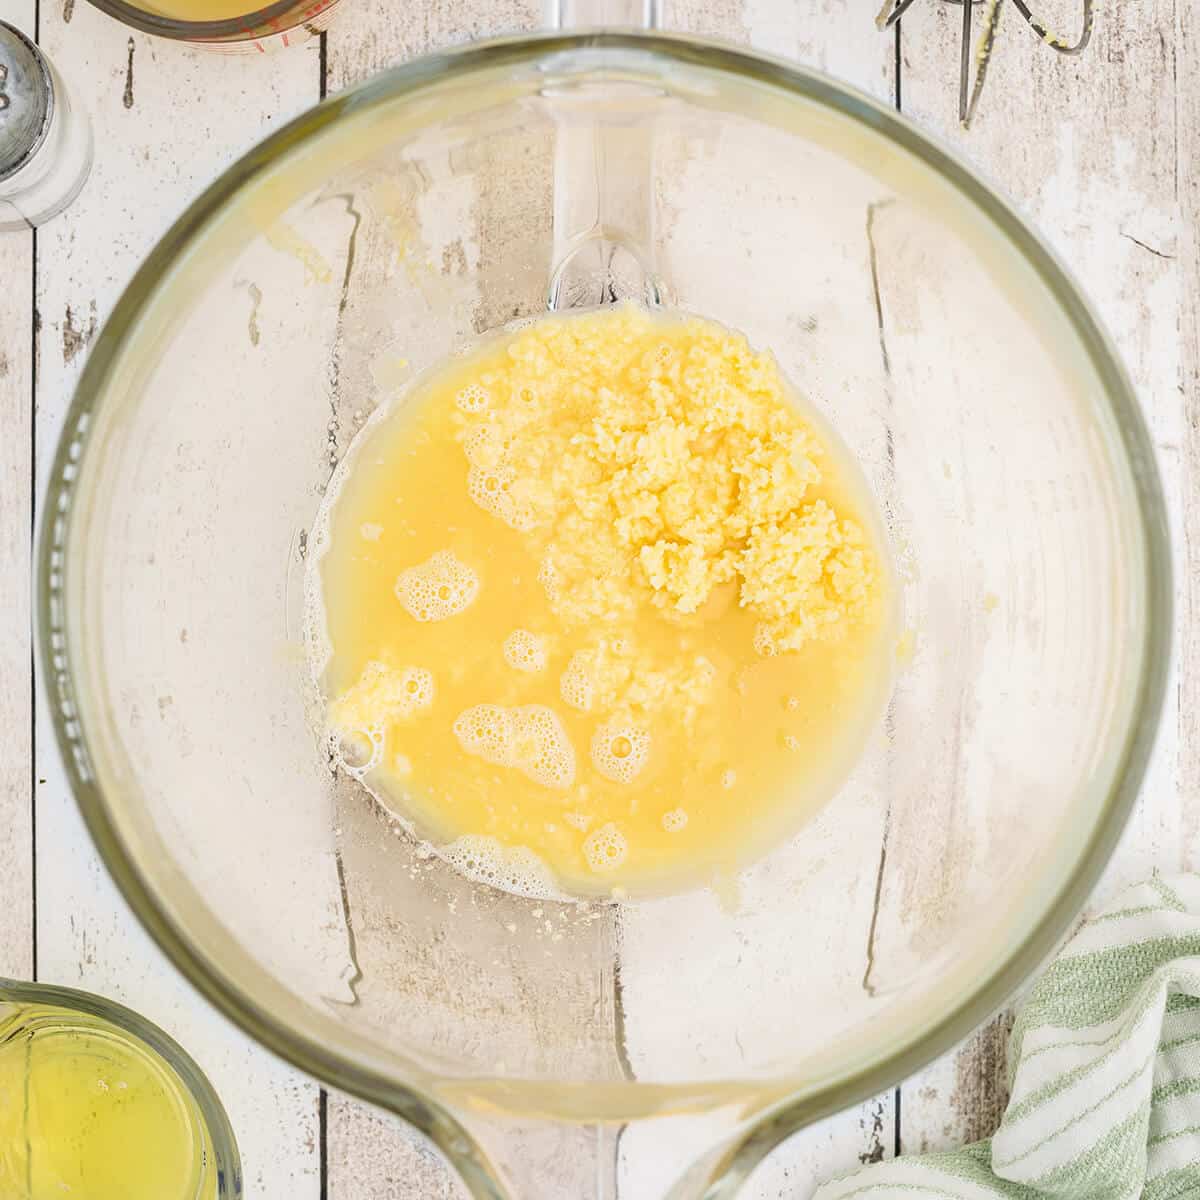 Adding pineapple juice to egg yolks and sugar.